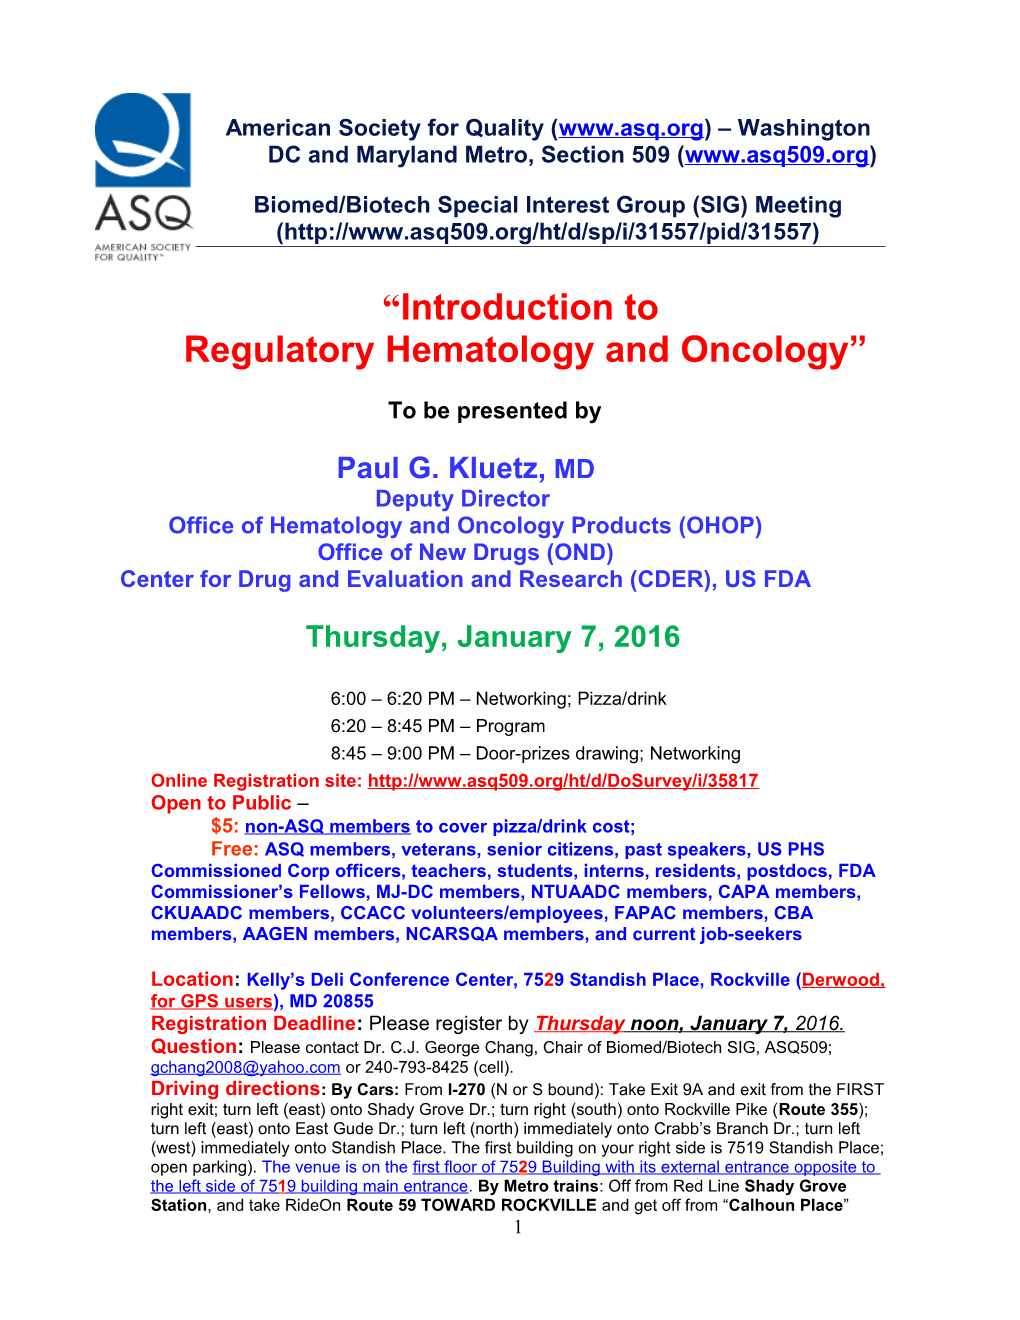 December ASQ509 Biomed/Biotech SIG Meeting